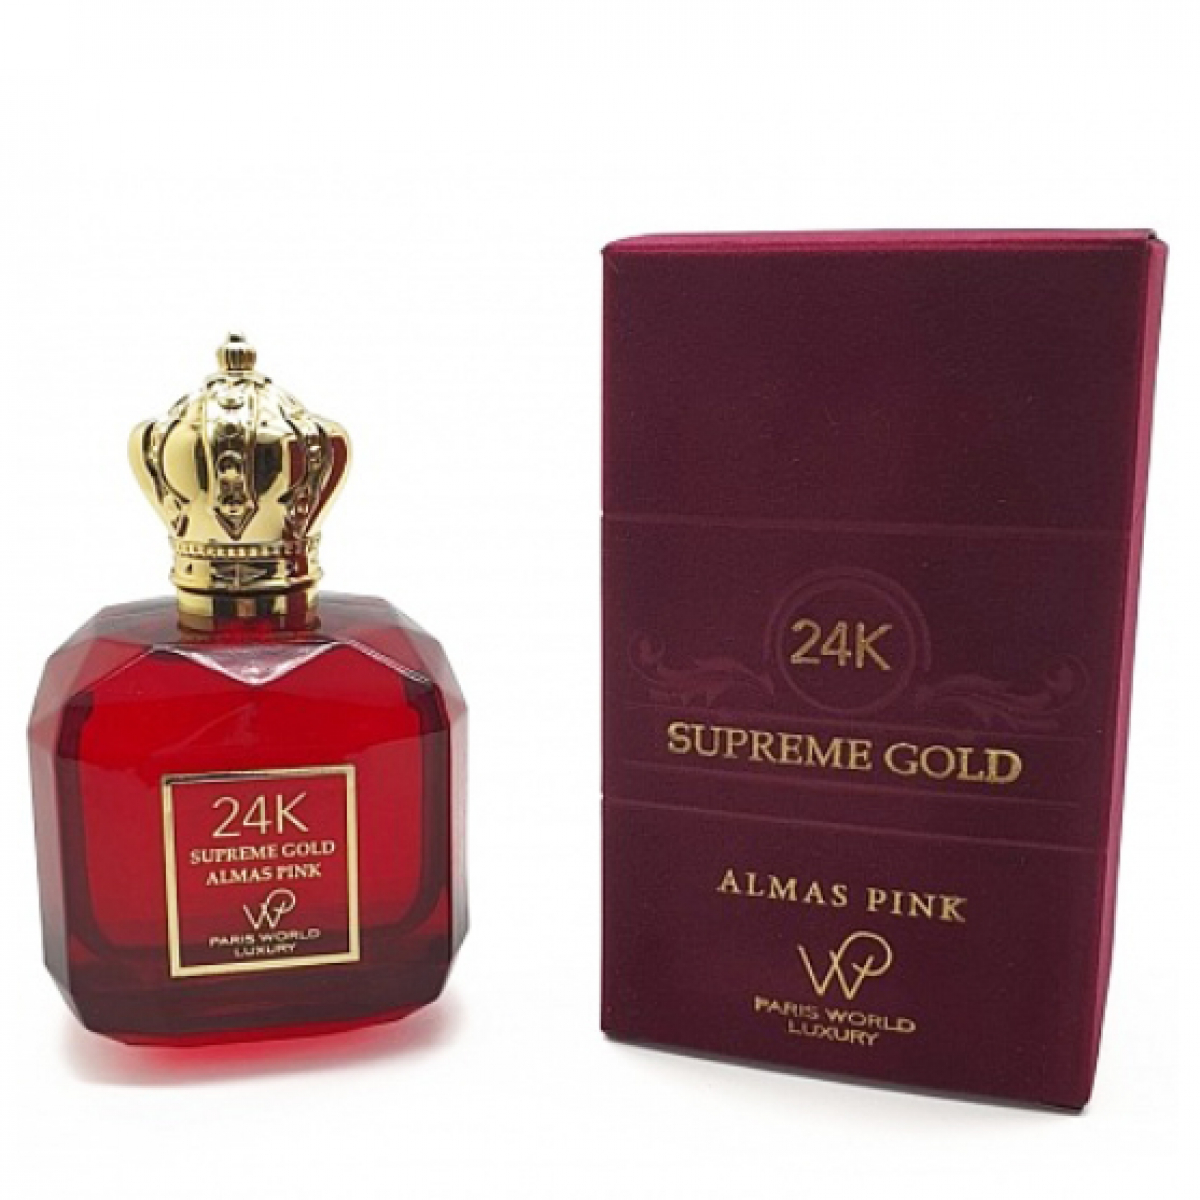 Supreme gold. Paris World Luxury 24k Supreme Gold Almas Pink. Духи Суприм Голд 24к. Paris World Luxury 24k Supreme rouge. 24k Supreme Gold Almas Pink EDP.